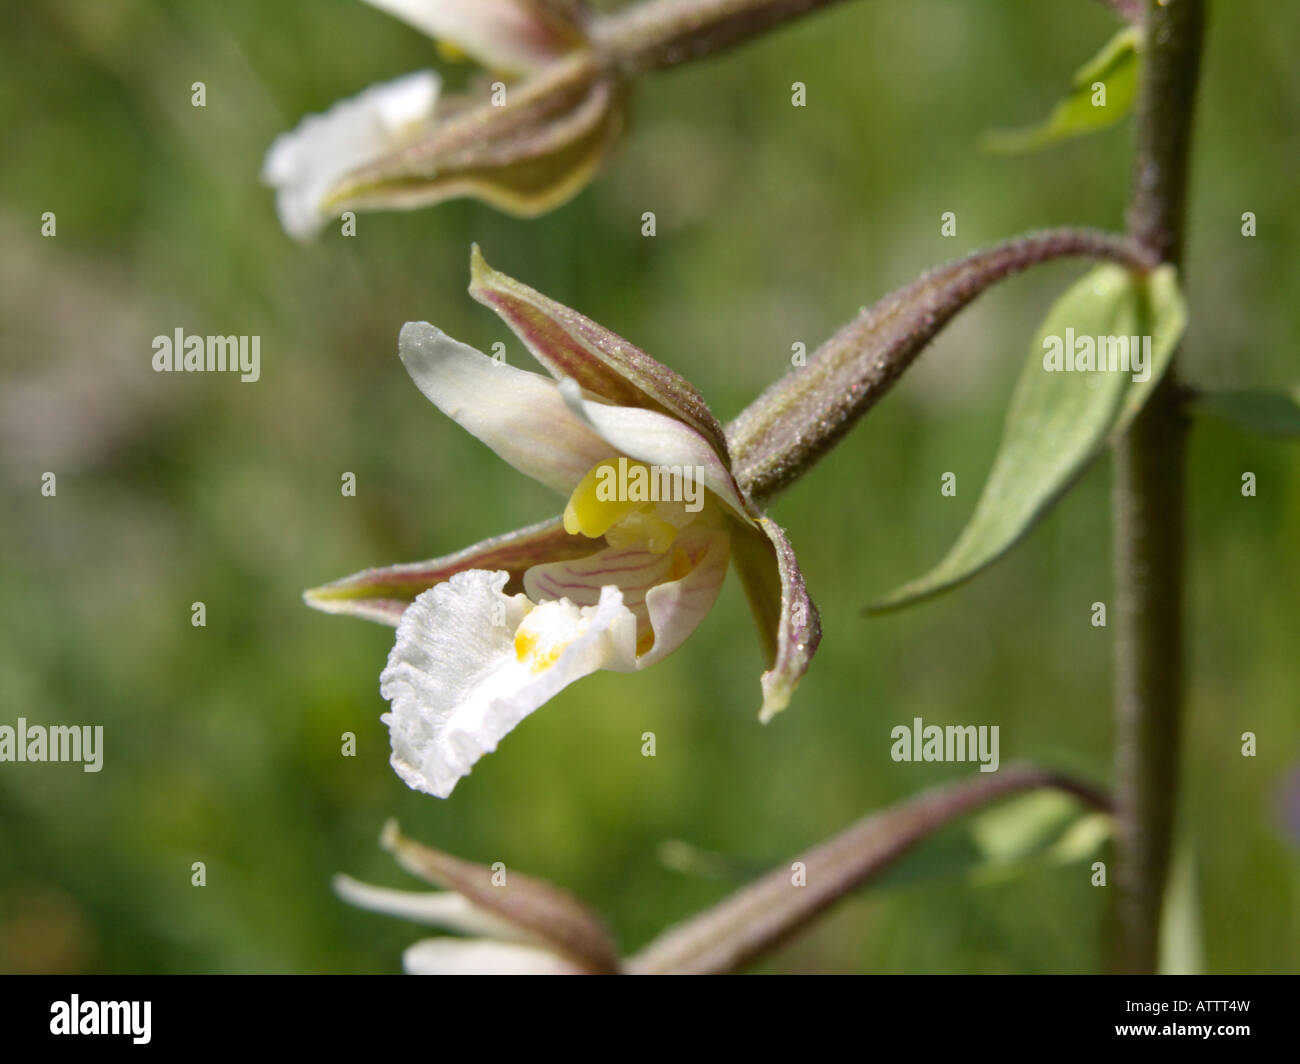 Marsh helleborine (Epipactis palustris) Stock Photo